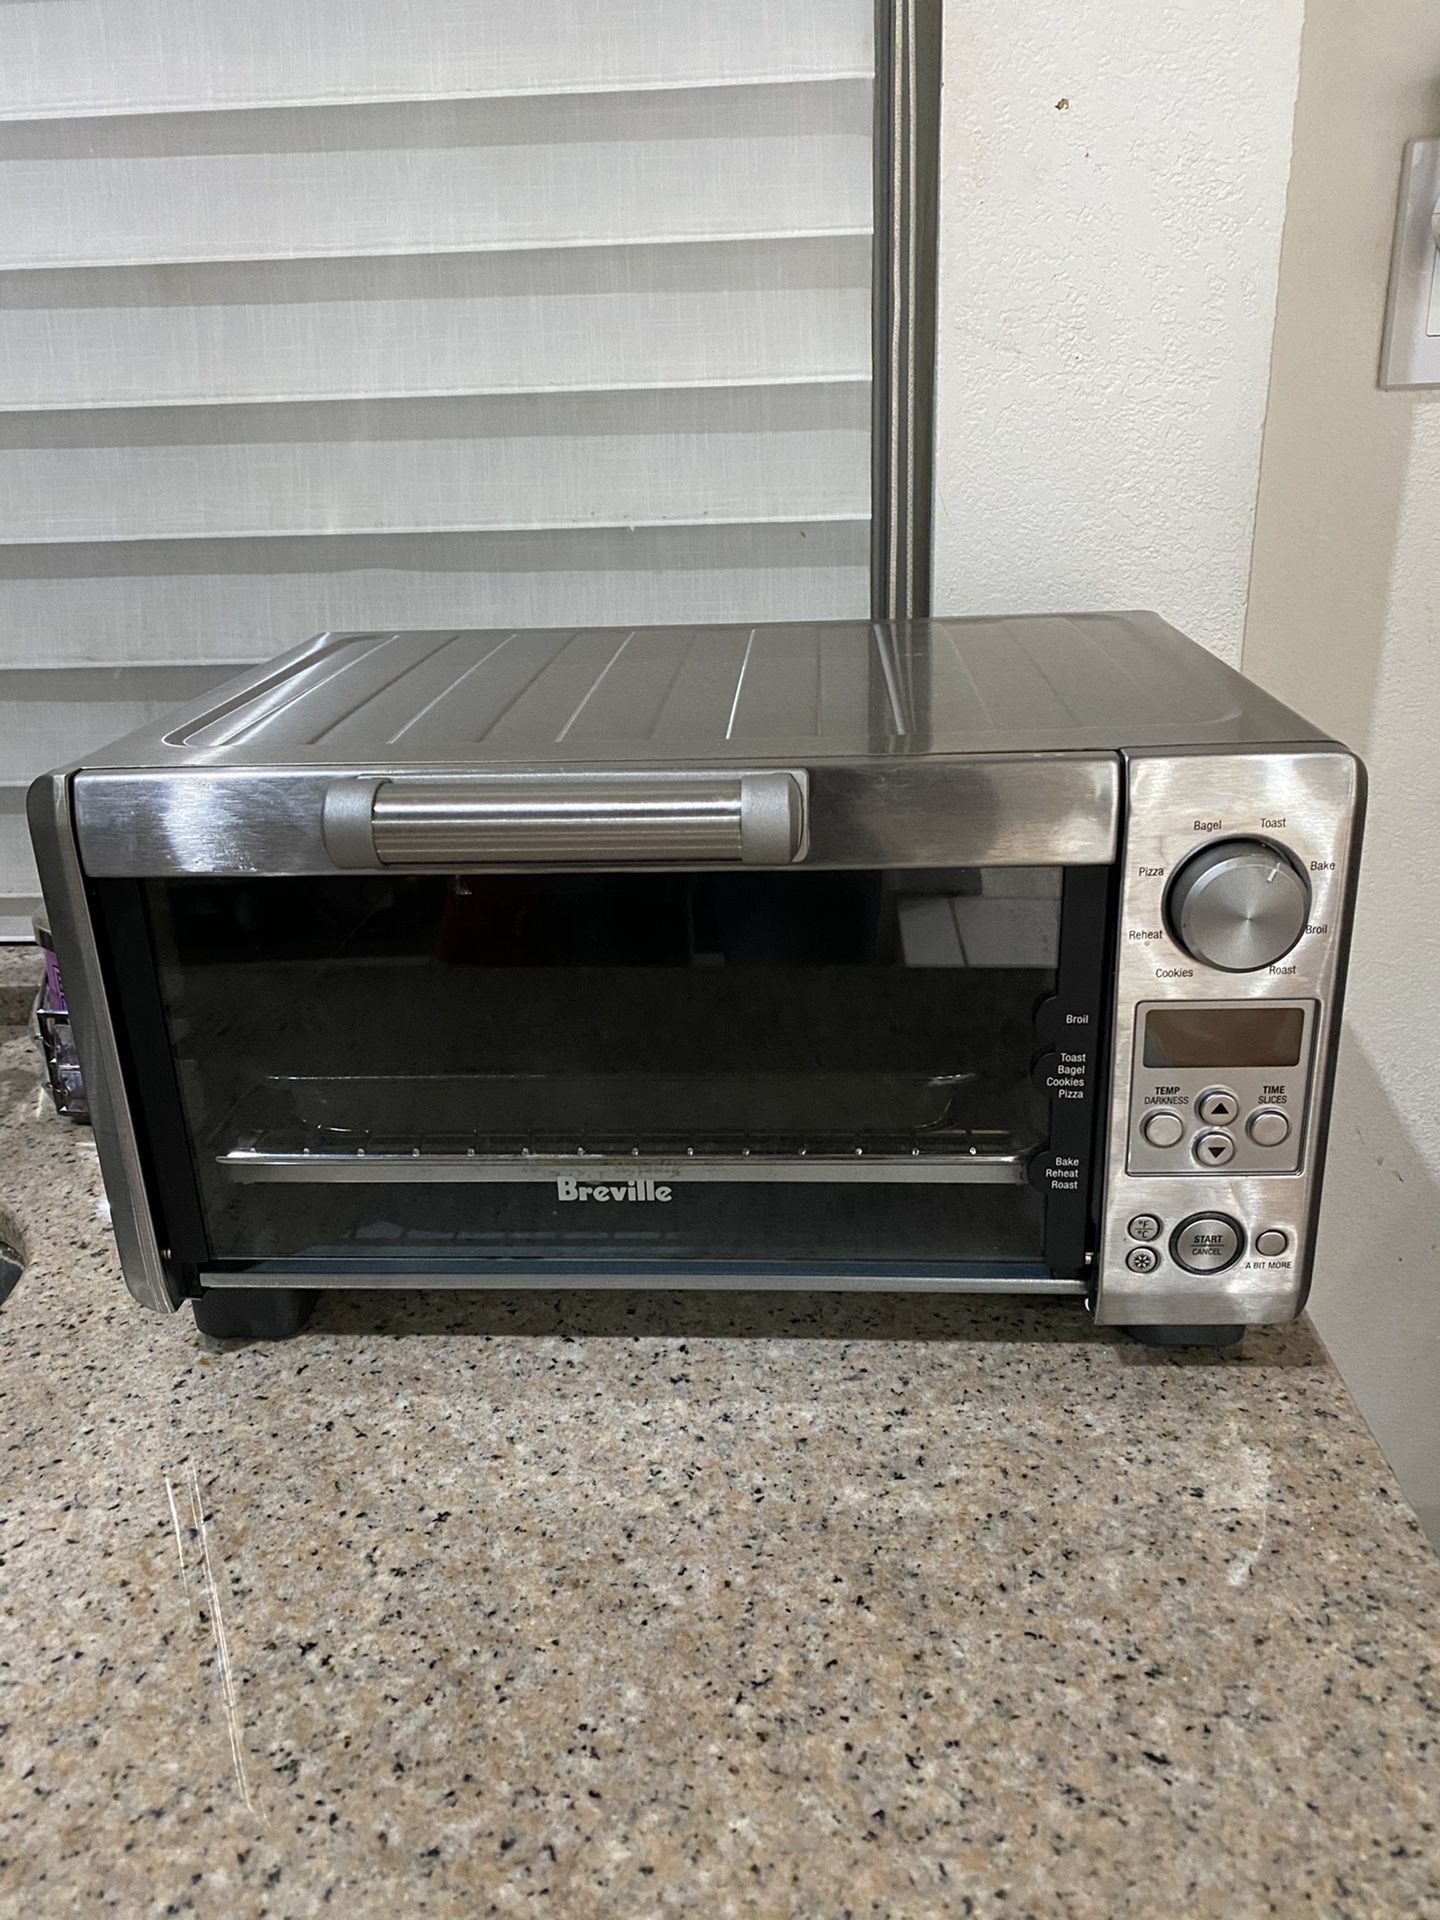 Breville toaster oven BOV450XL minimal use